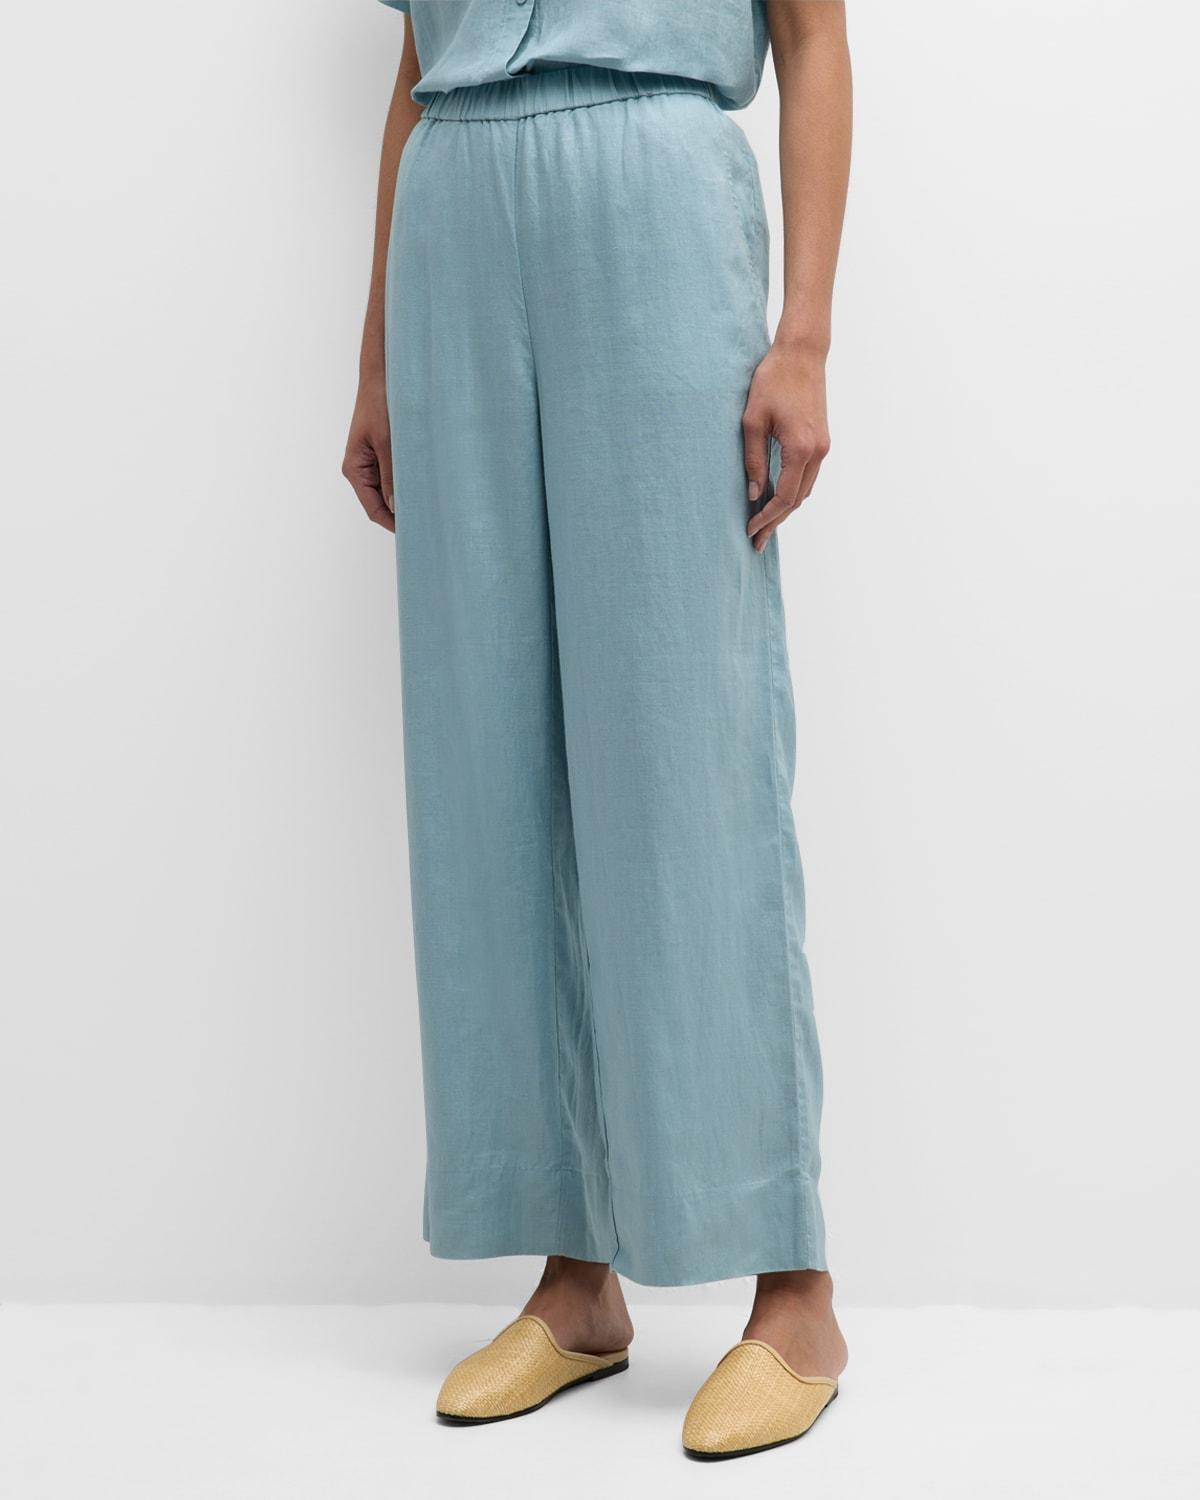 Eileen Fisher Linen Wide Leg Pants Product Image